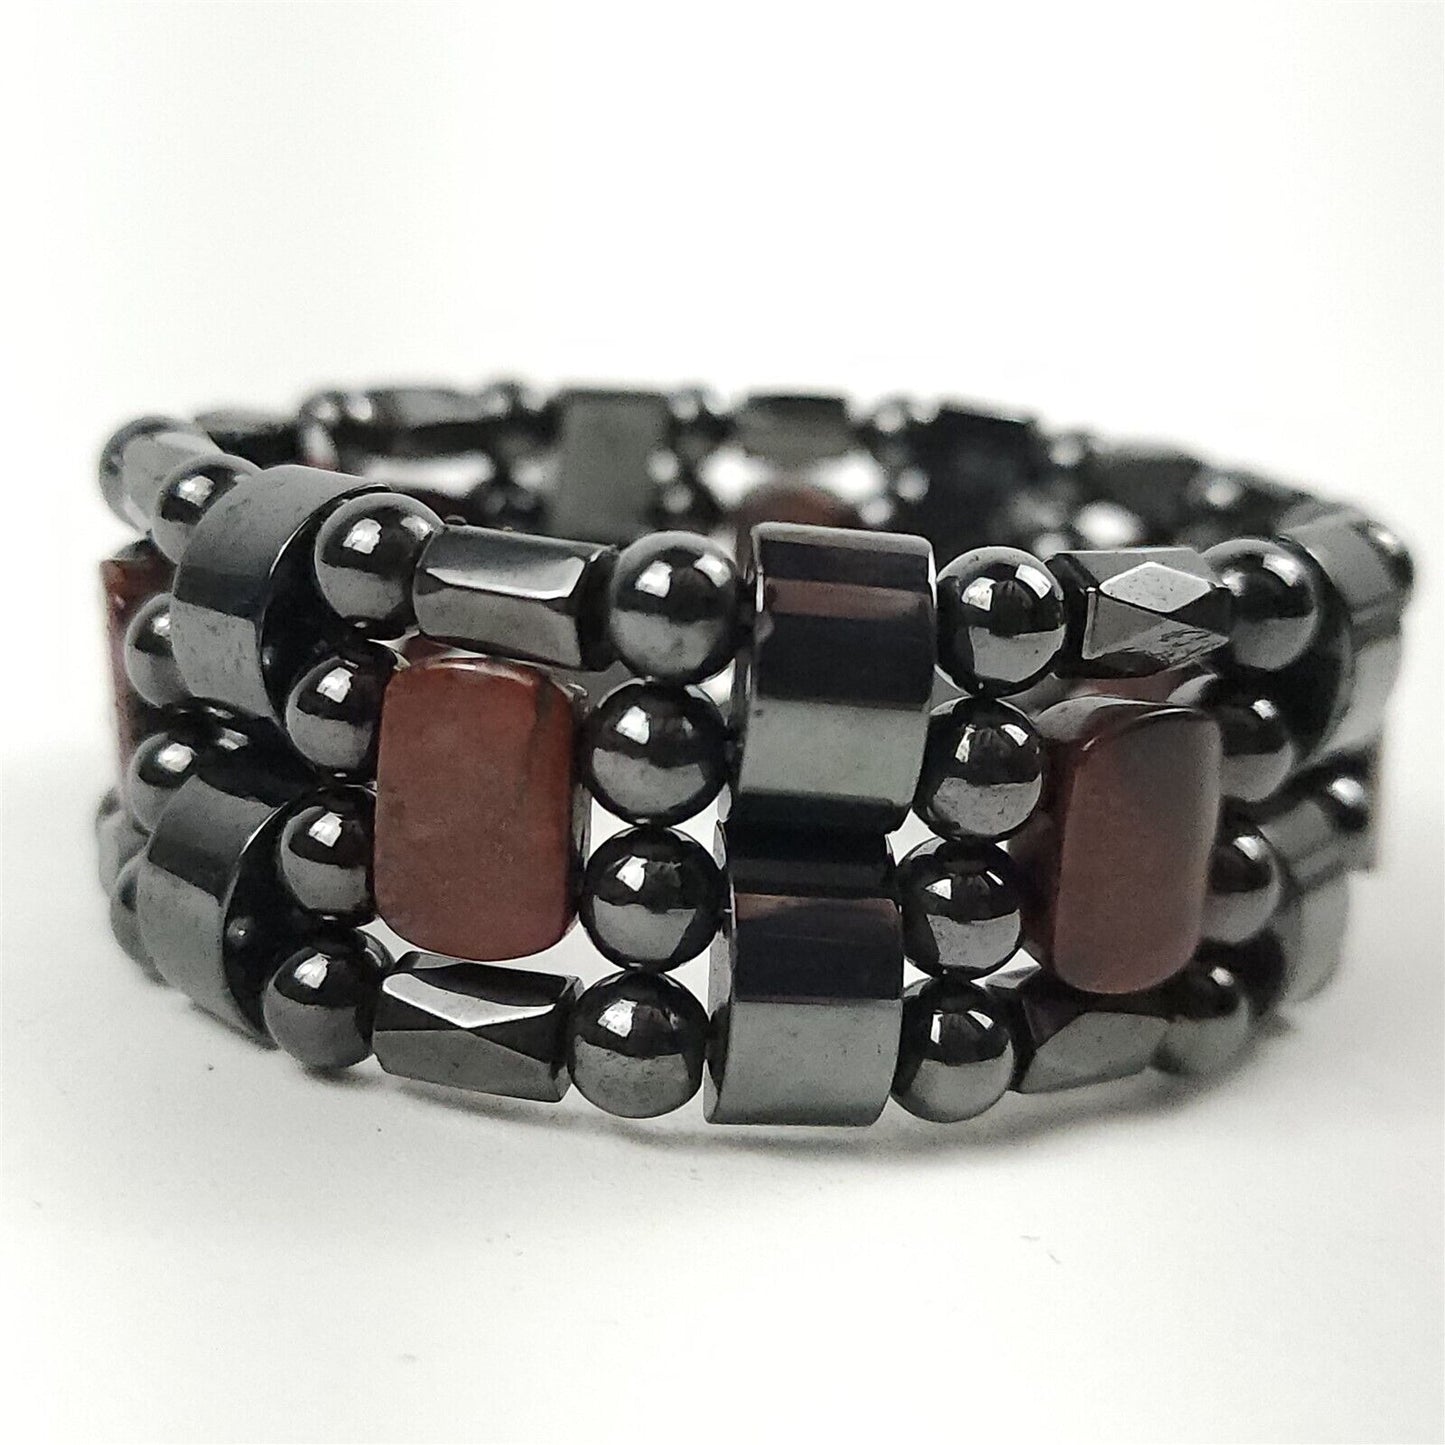 Black & Red Jasper Natural Stone Magnetic Bracelet Therapeutic Quad